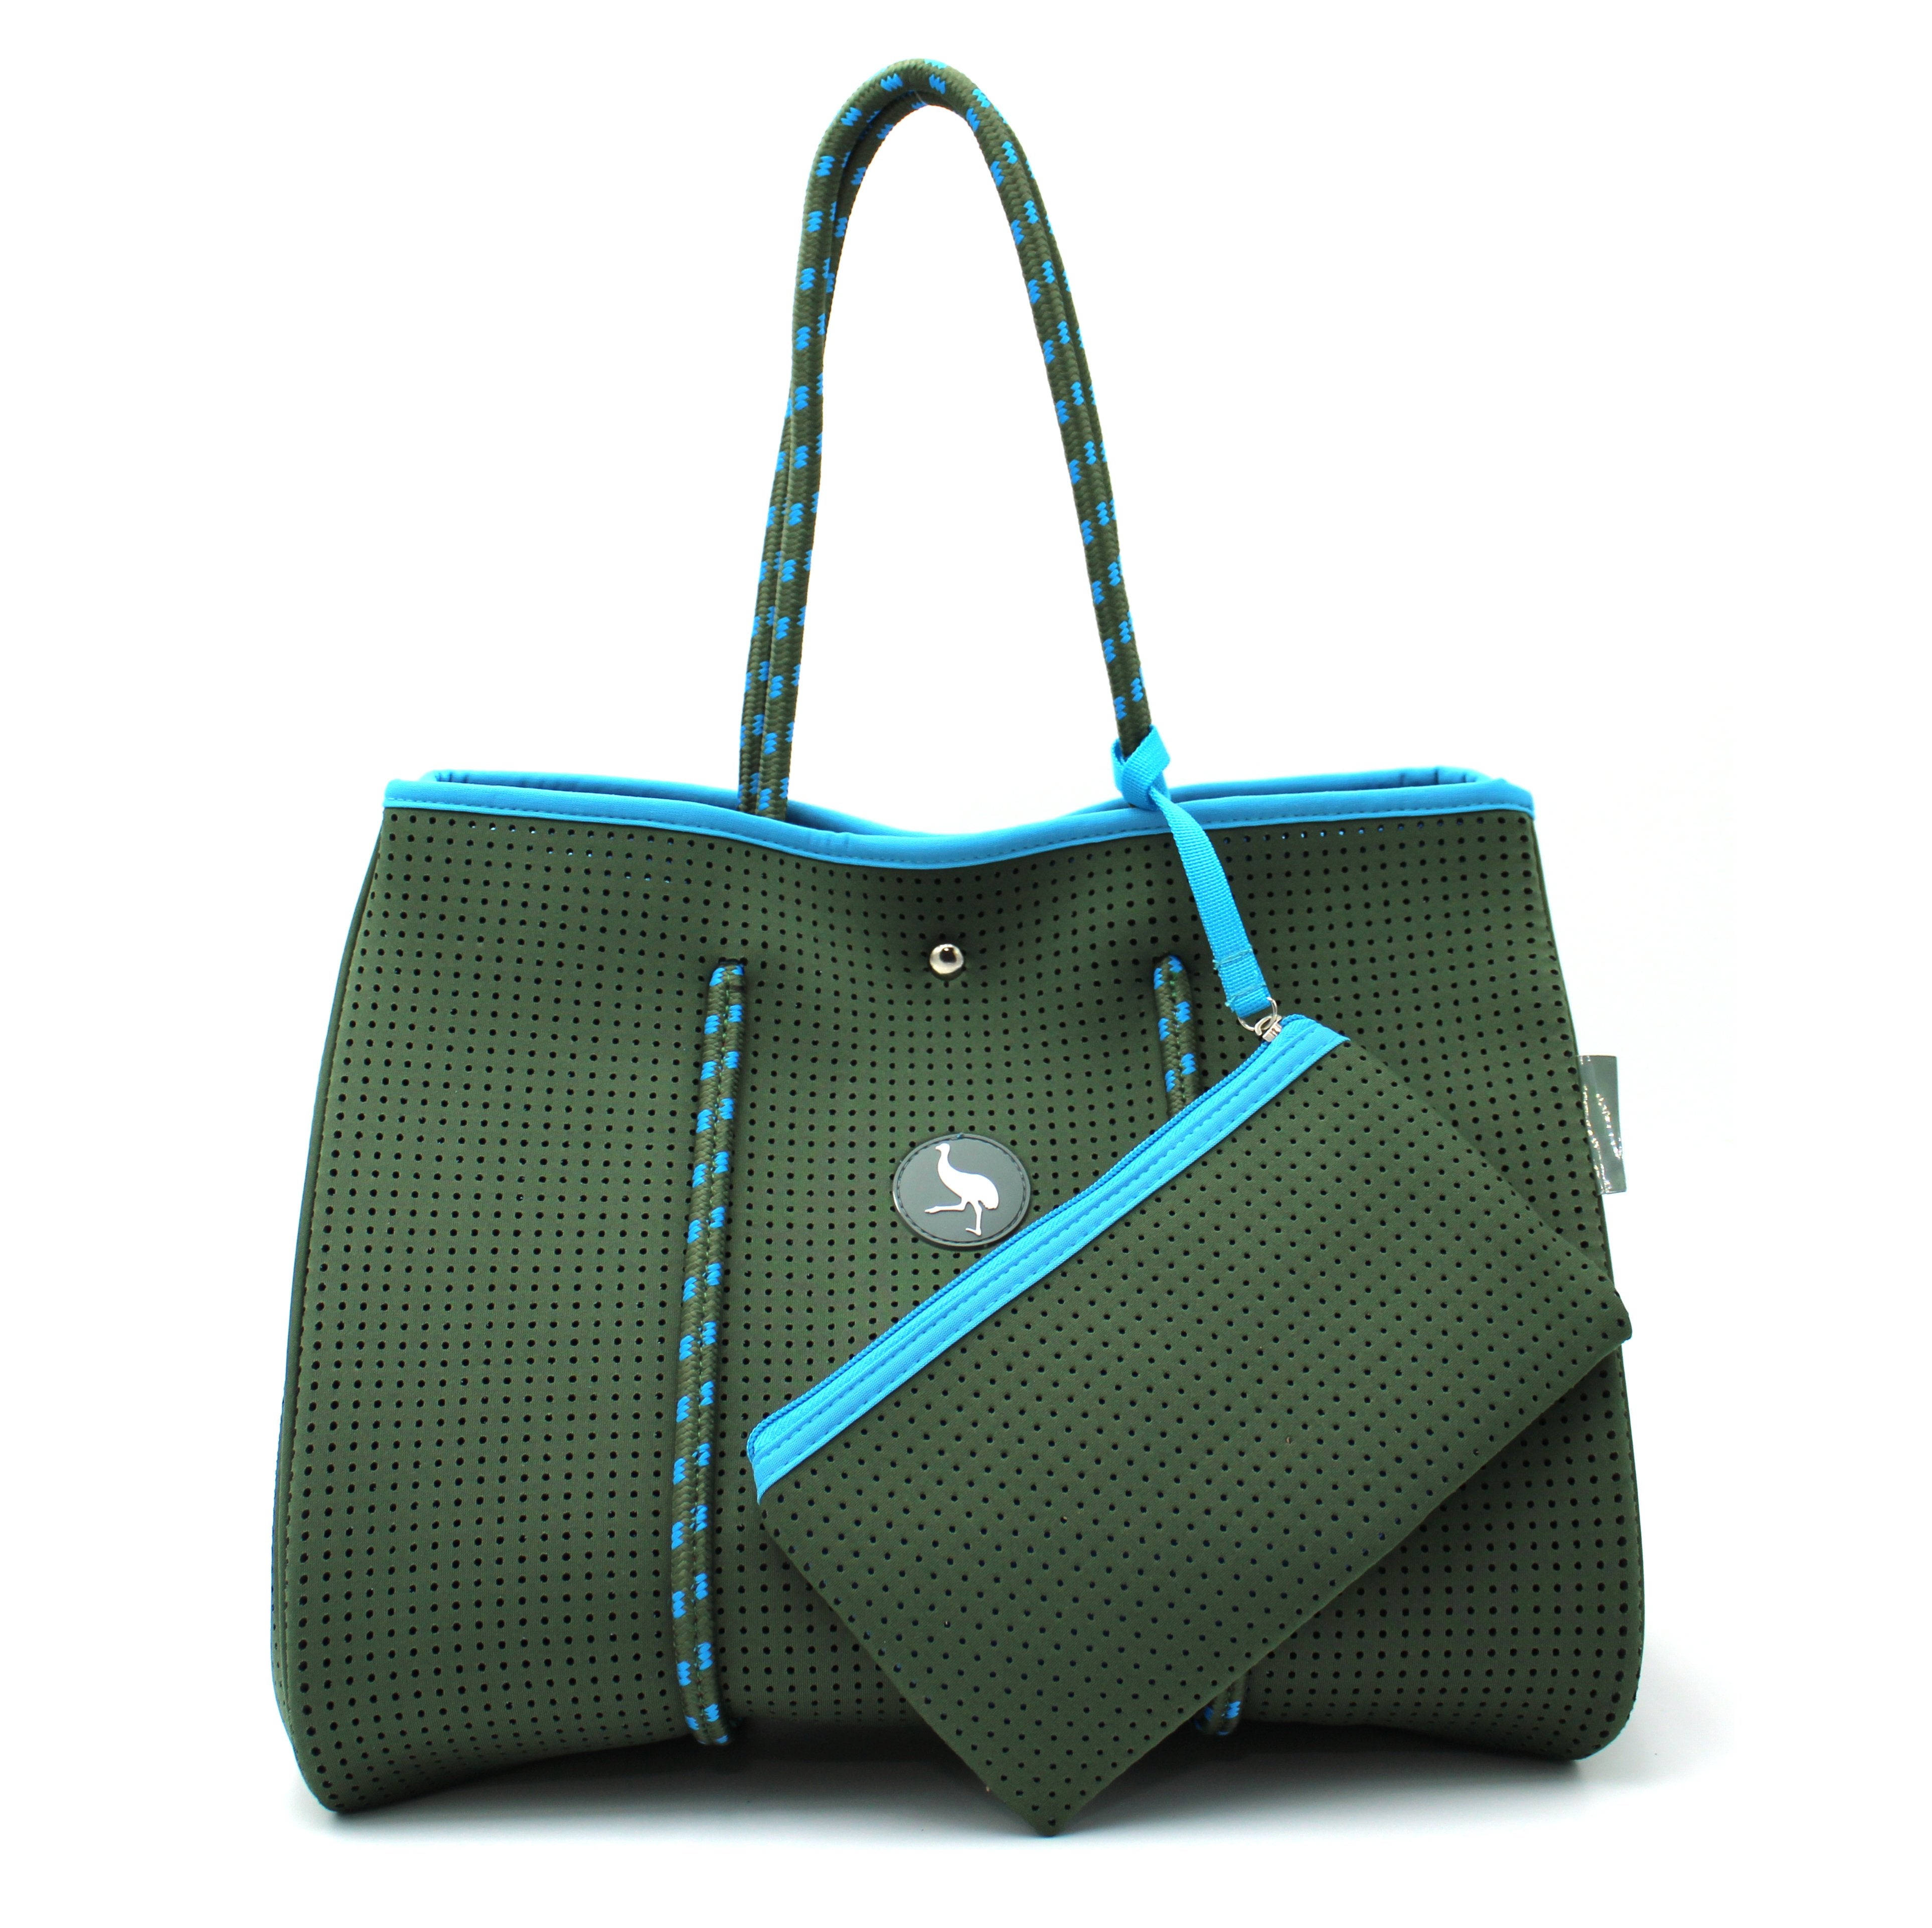 Neoprene Tote Bag - Khaki/Turquoise